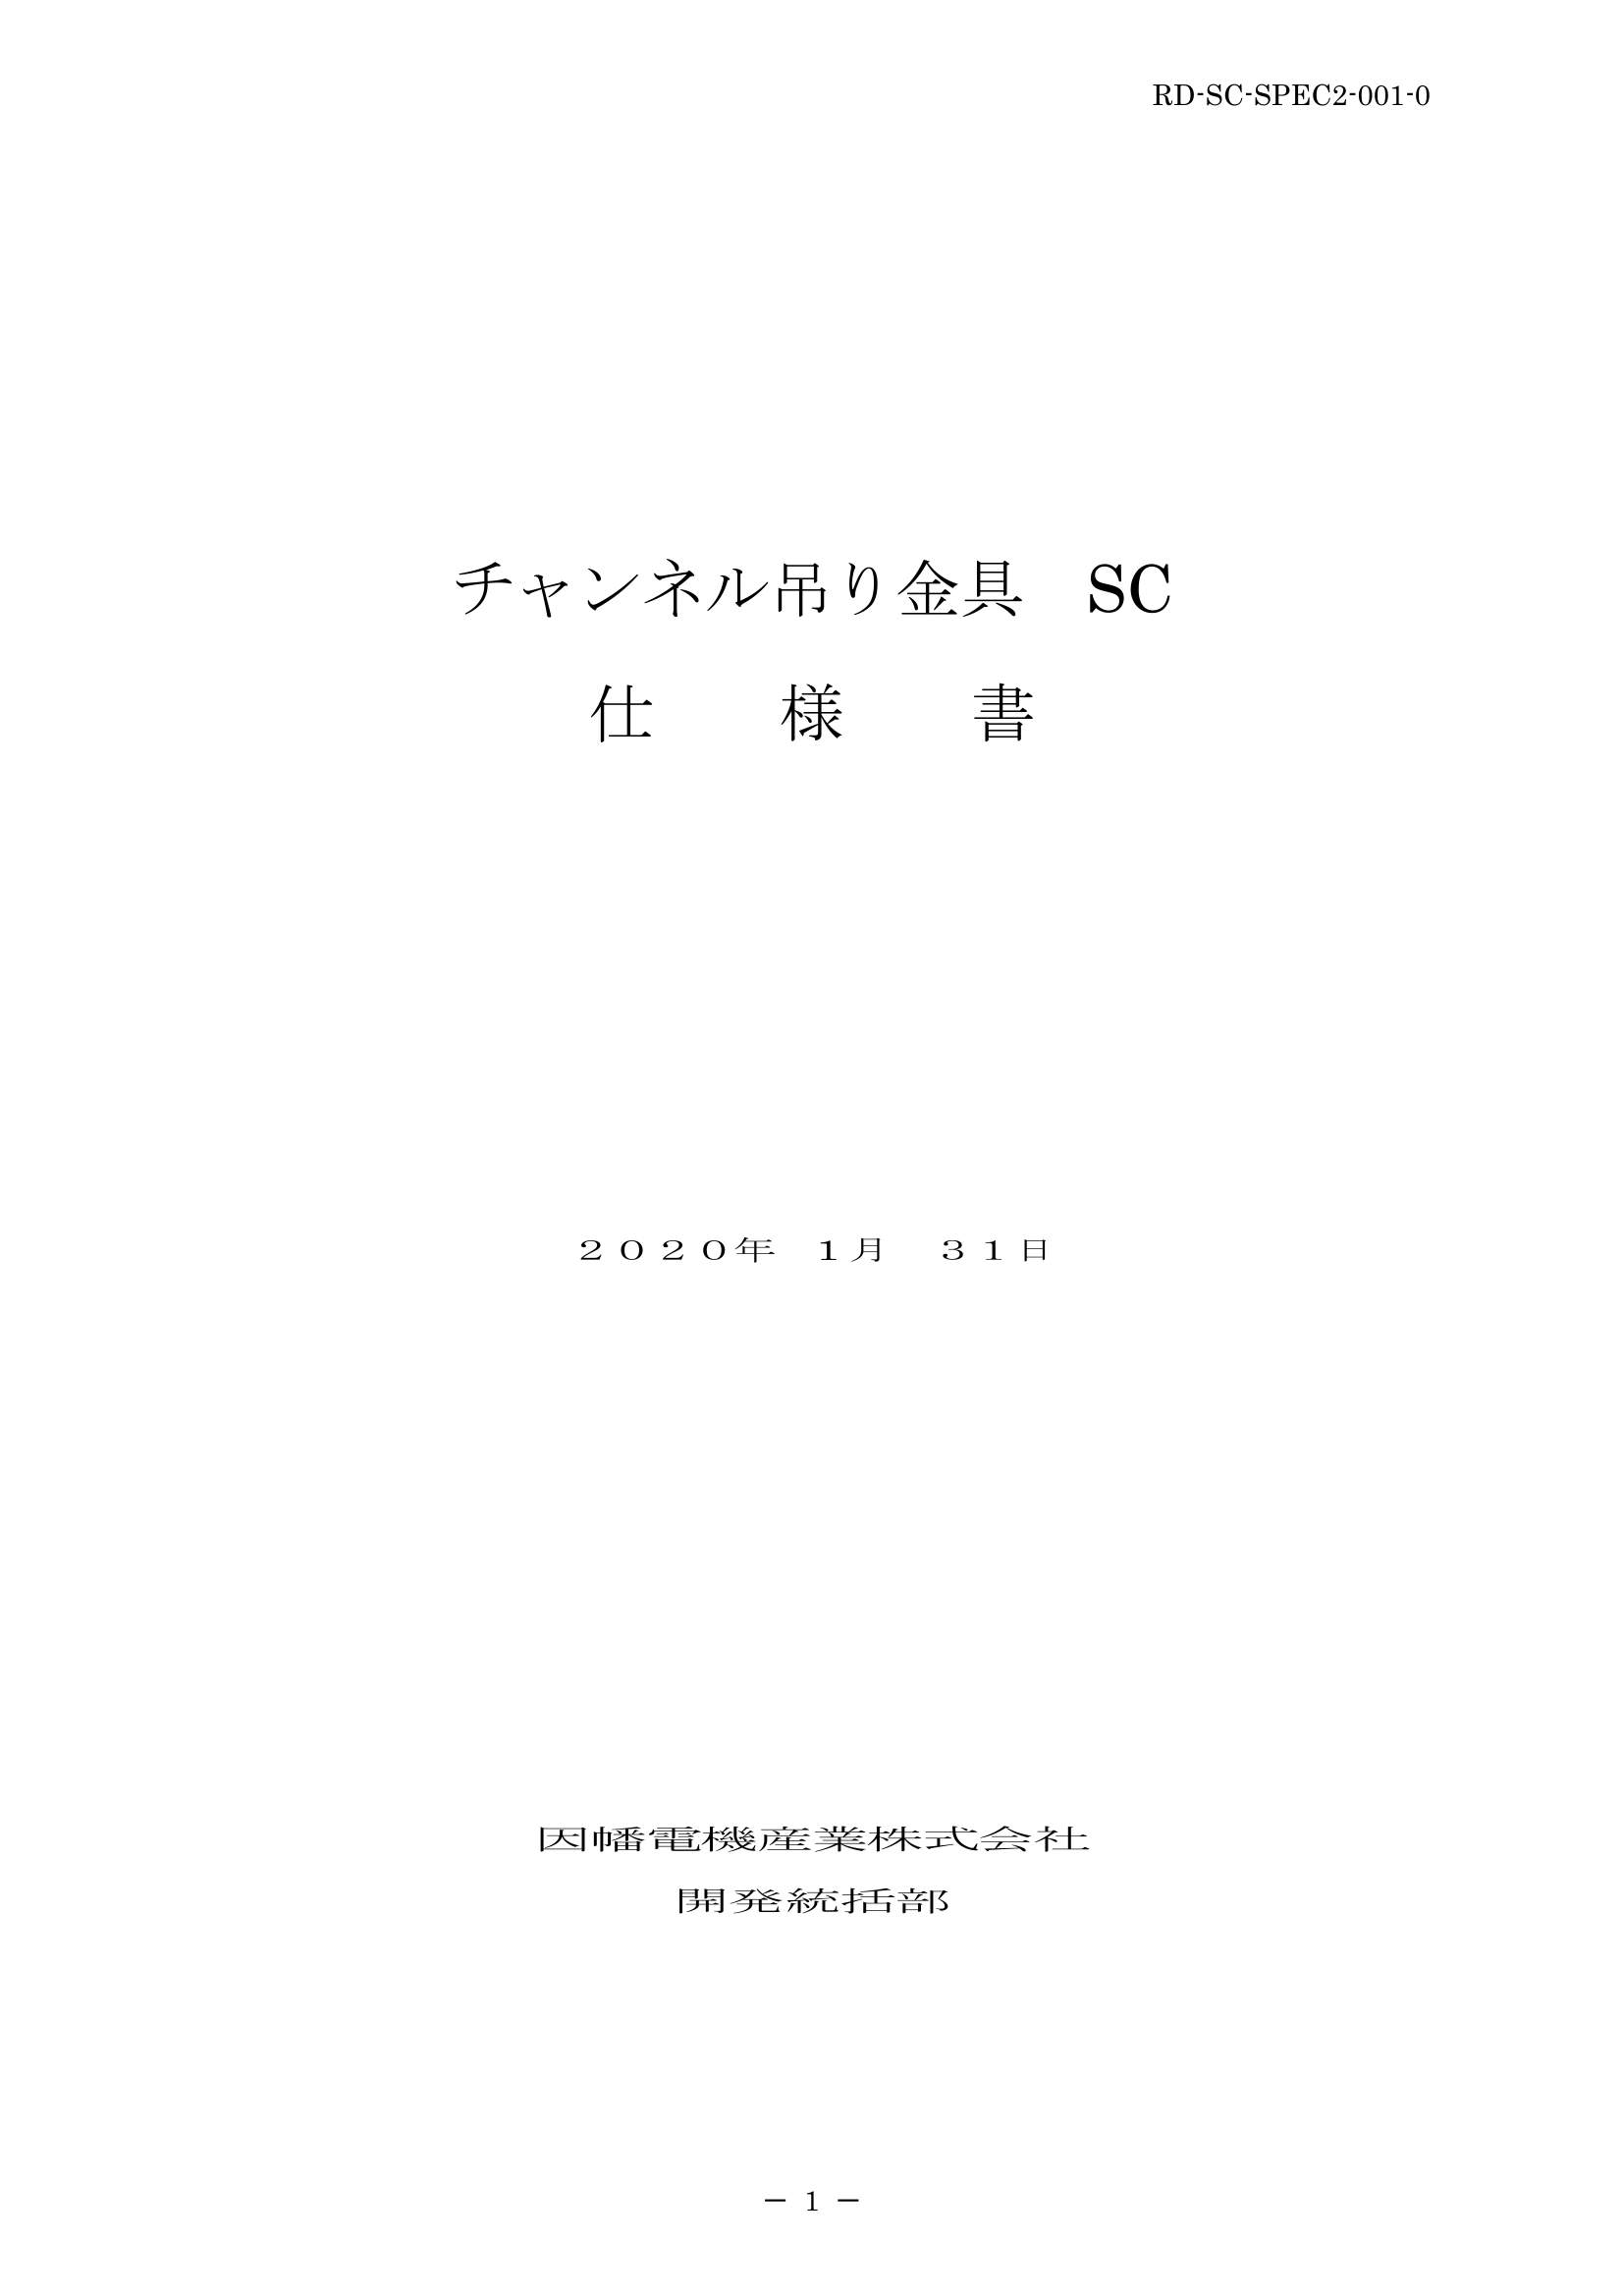 SC_仕様書_20200131.pdf